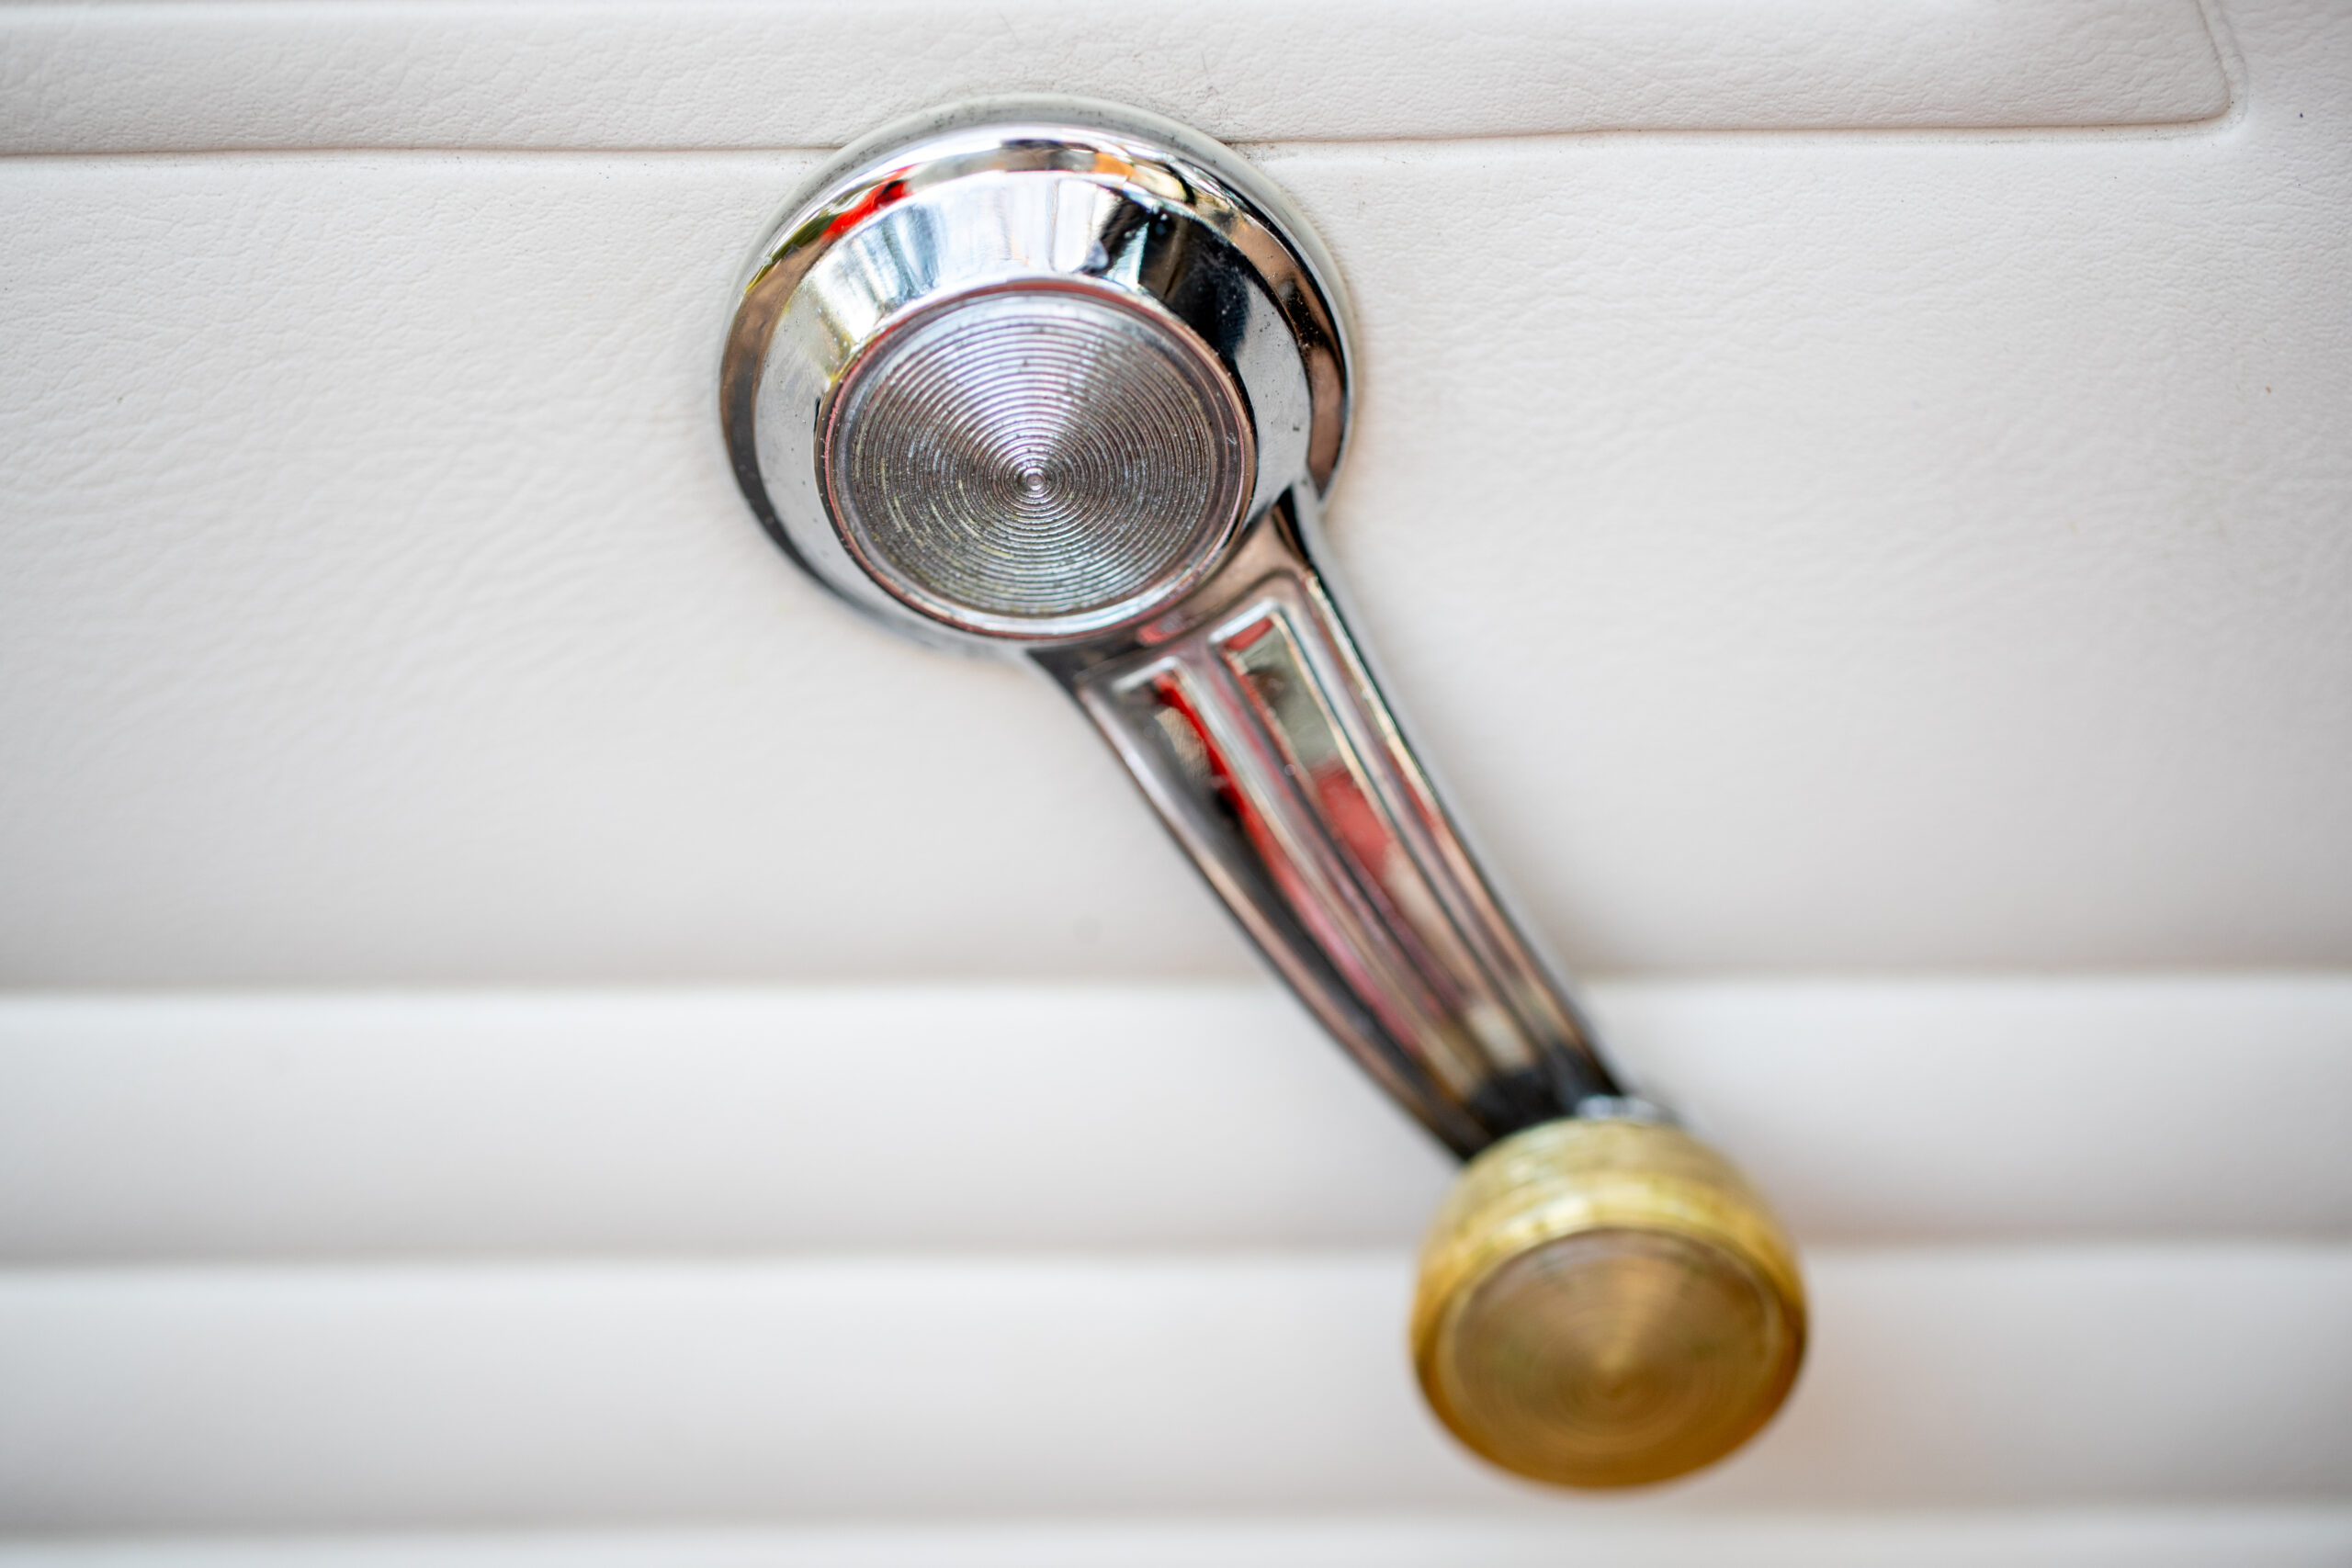 Manual window crank handle on a white car door panel.